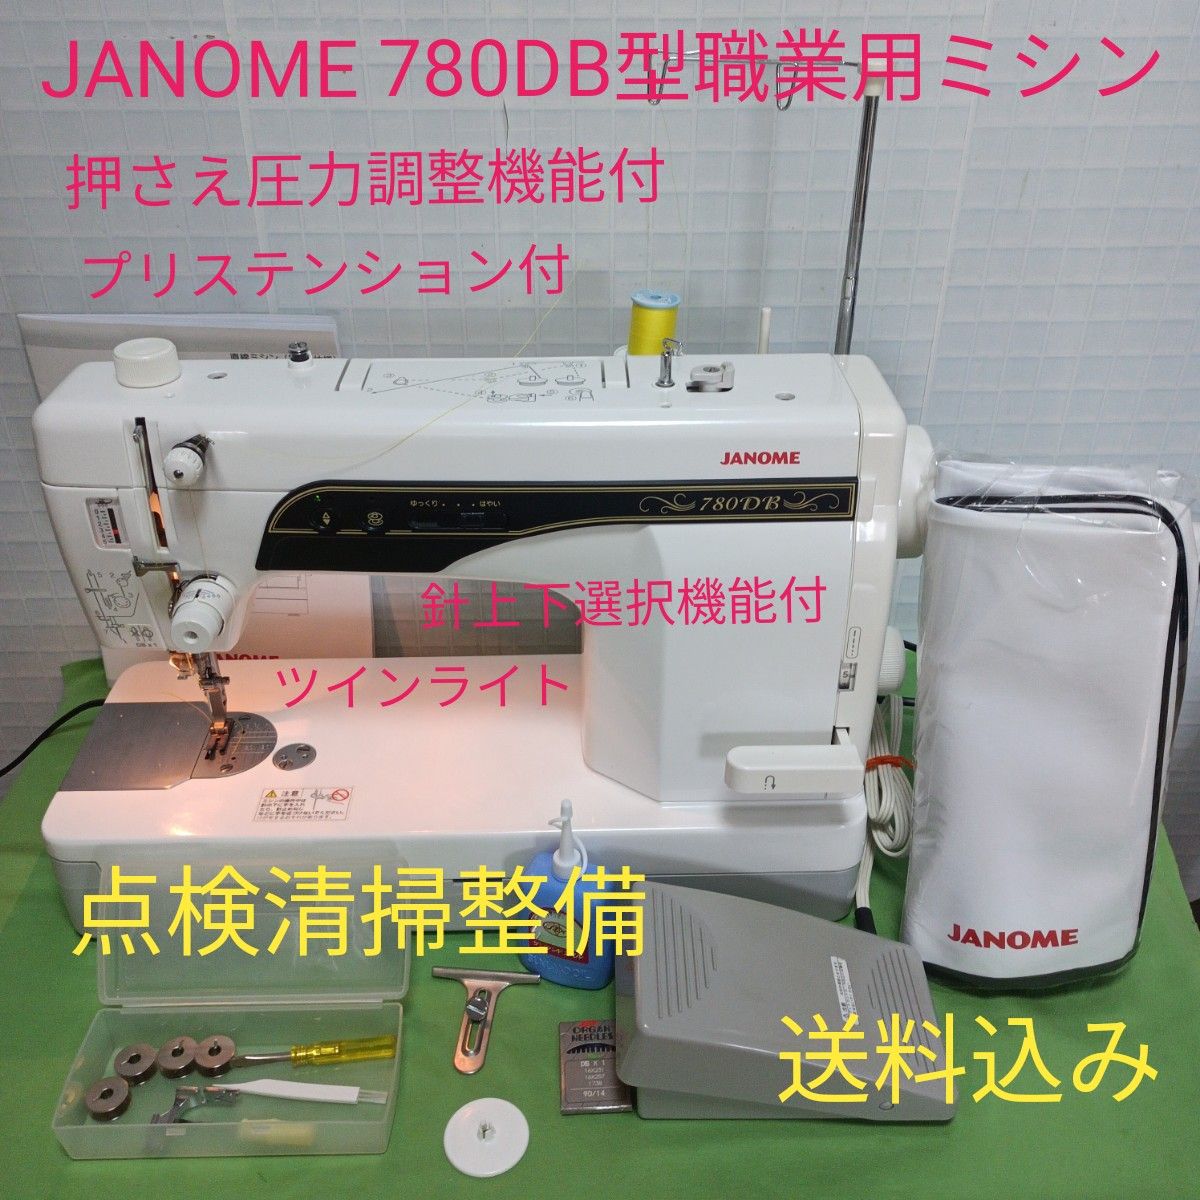 JANOME 780DB型職業用ミシン